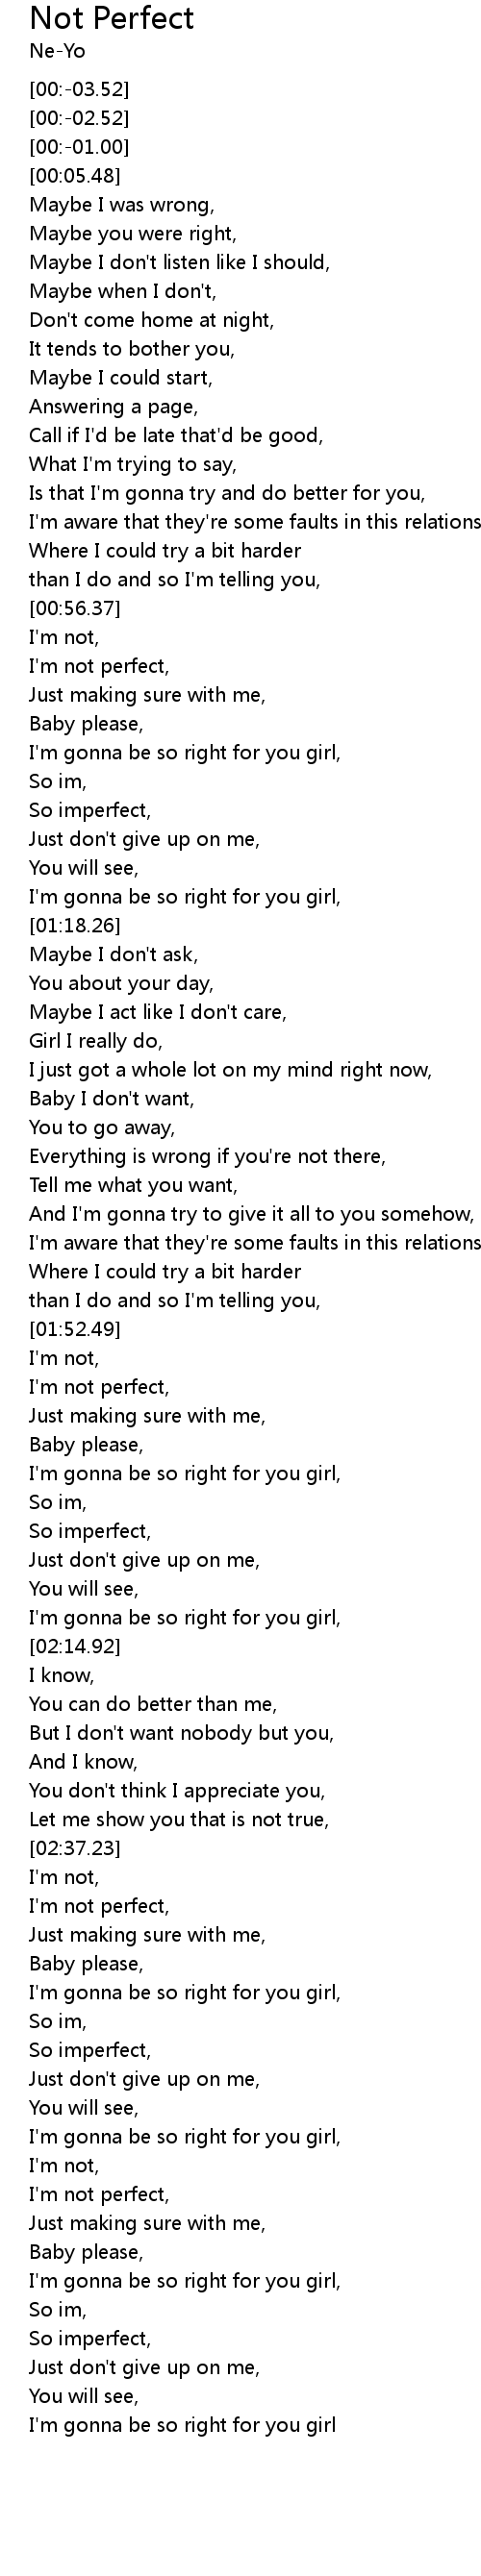 Perfect lyrics